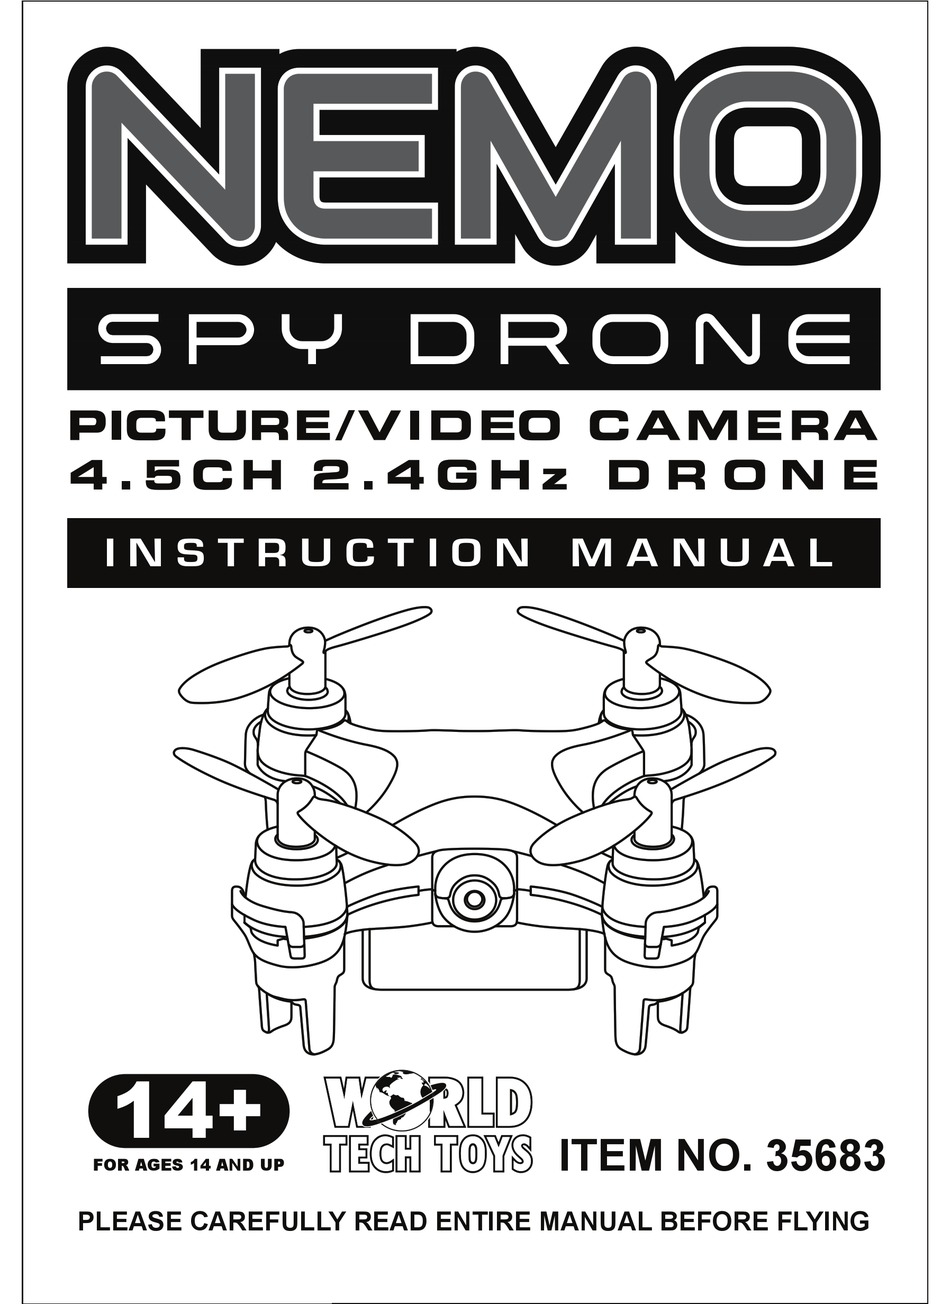 NEMO SPY DRONE INSTRUCTION MANUALAL Pdf Download |